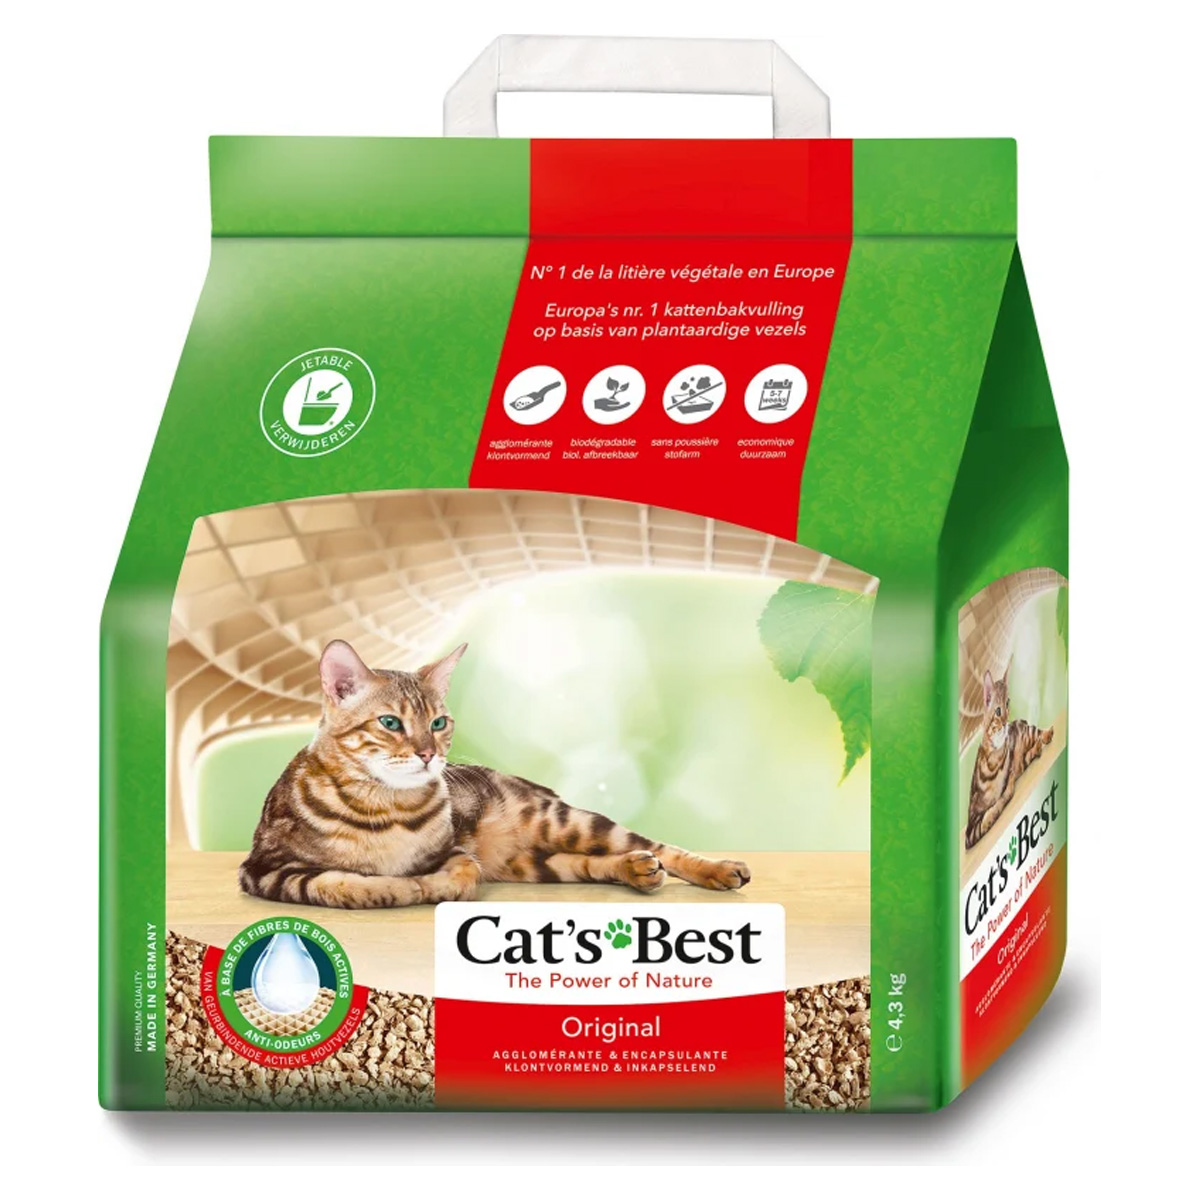 Una bolsa de la arena vegetal aglomerante para gatos Cat’s Best Original